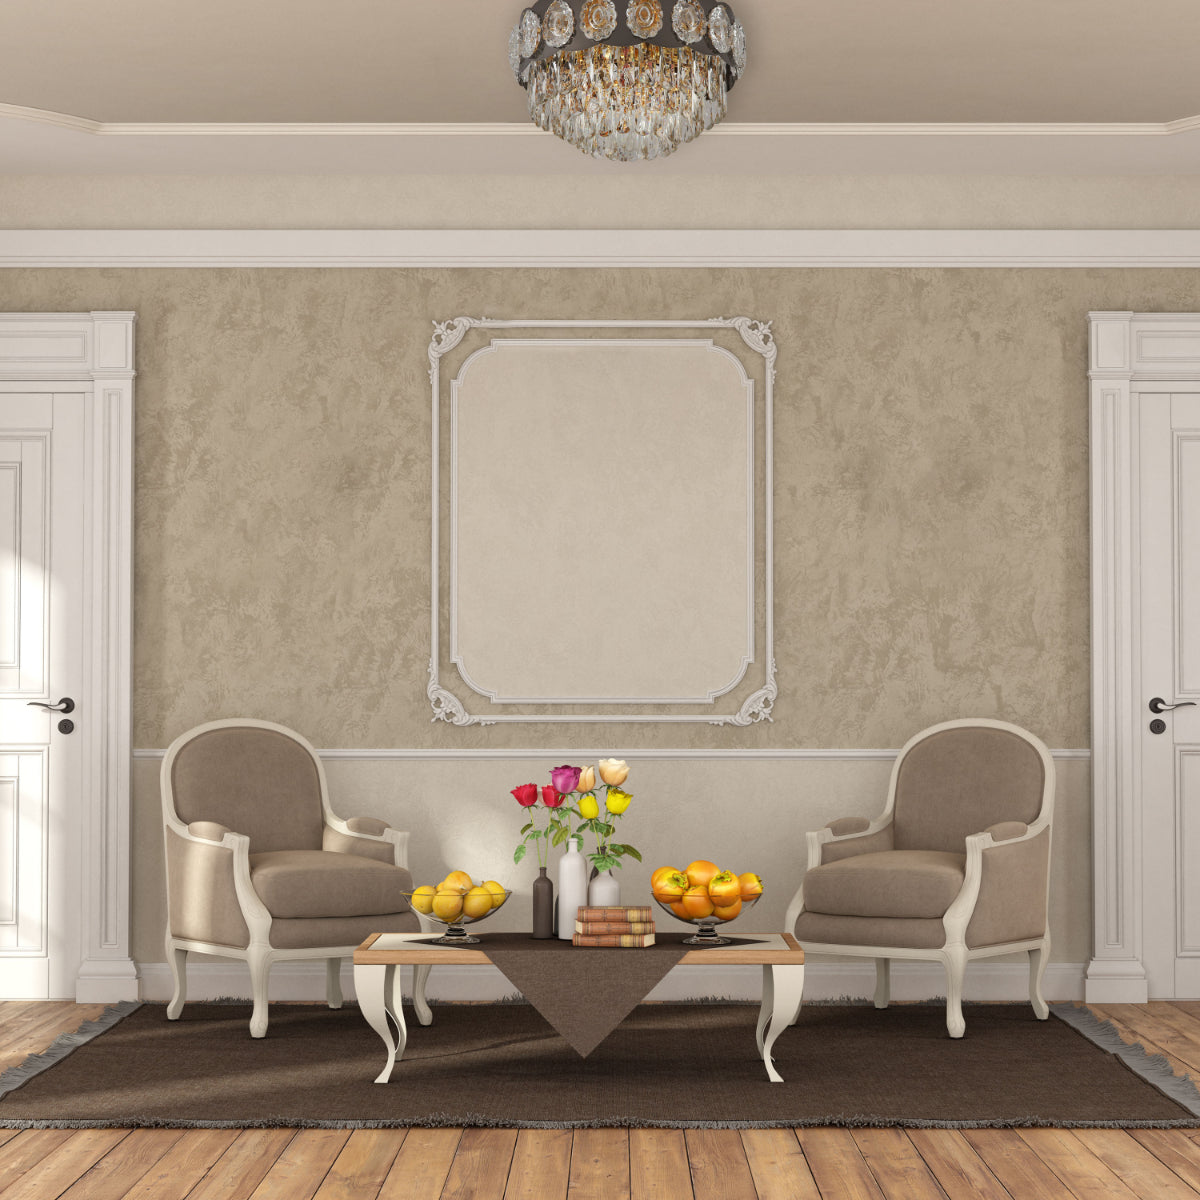 Indoor setting living room, kitchen, bedroom Luxury Clear Crystal Flush Modern Ceiling Chandelier Light Gold | TEKLED 159-18007